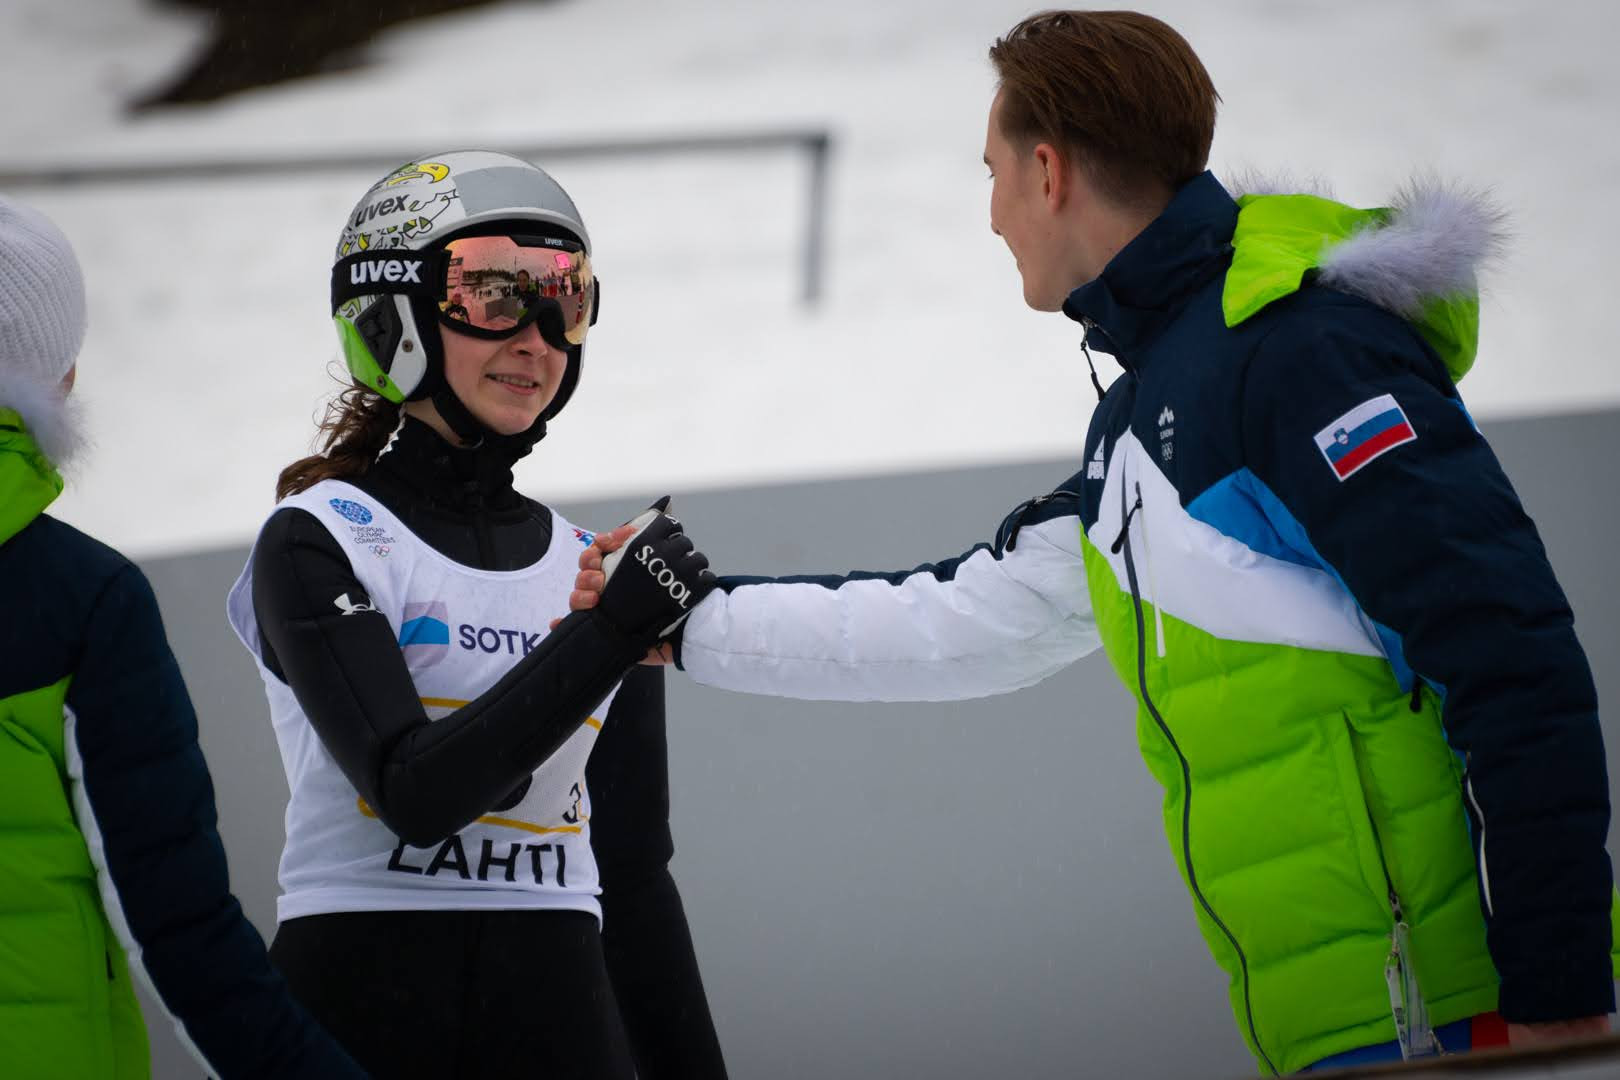 In Lahti, some 500km south of Vuokatti, Slovenia claimed mixed team ski jumping gold ©Thomas Parviainen/EYOF 2022 Vuokatti